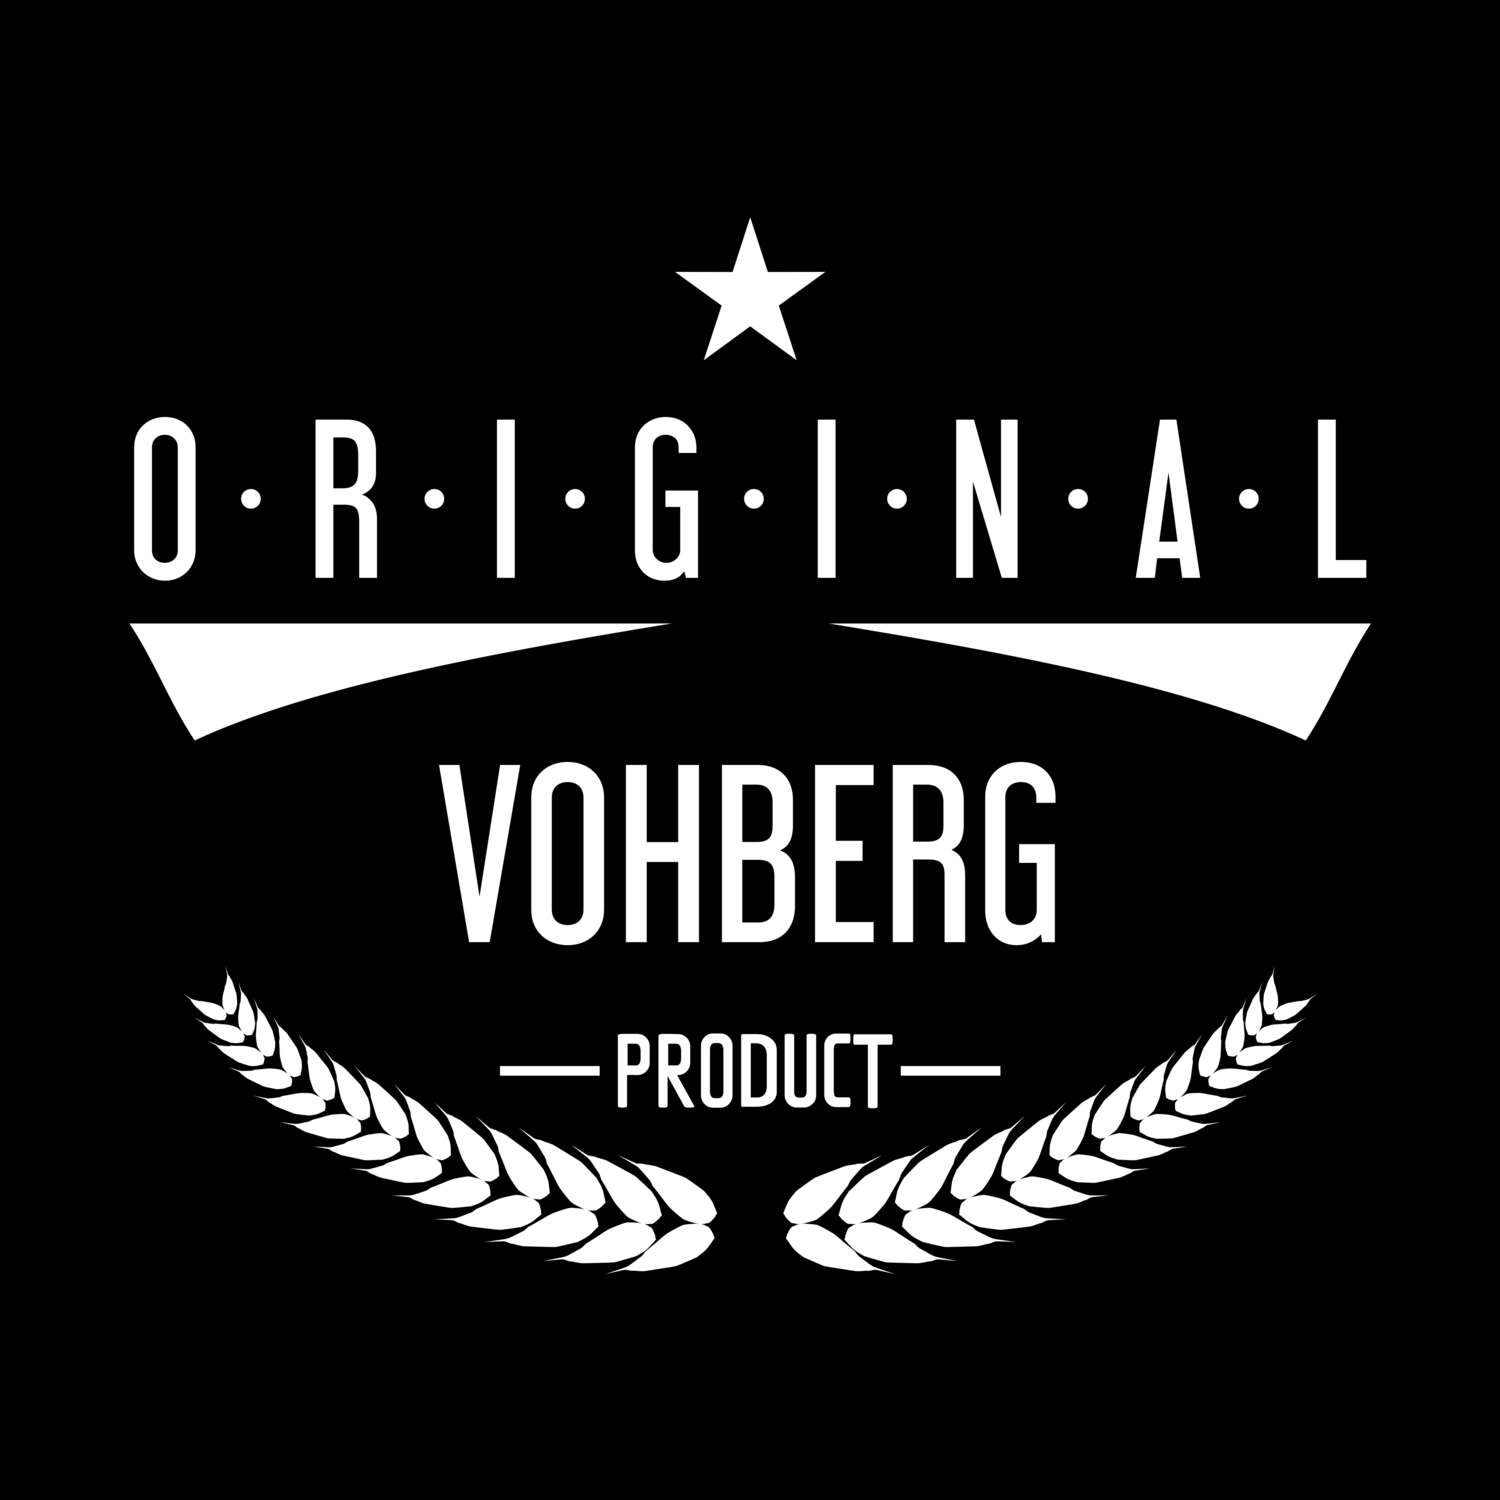 Vohberg T-Shirt »Original Product«